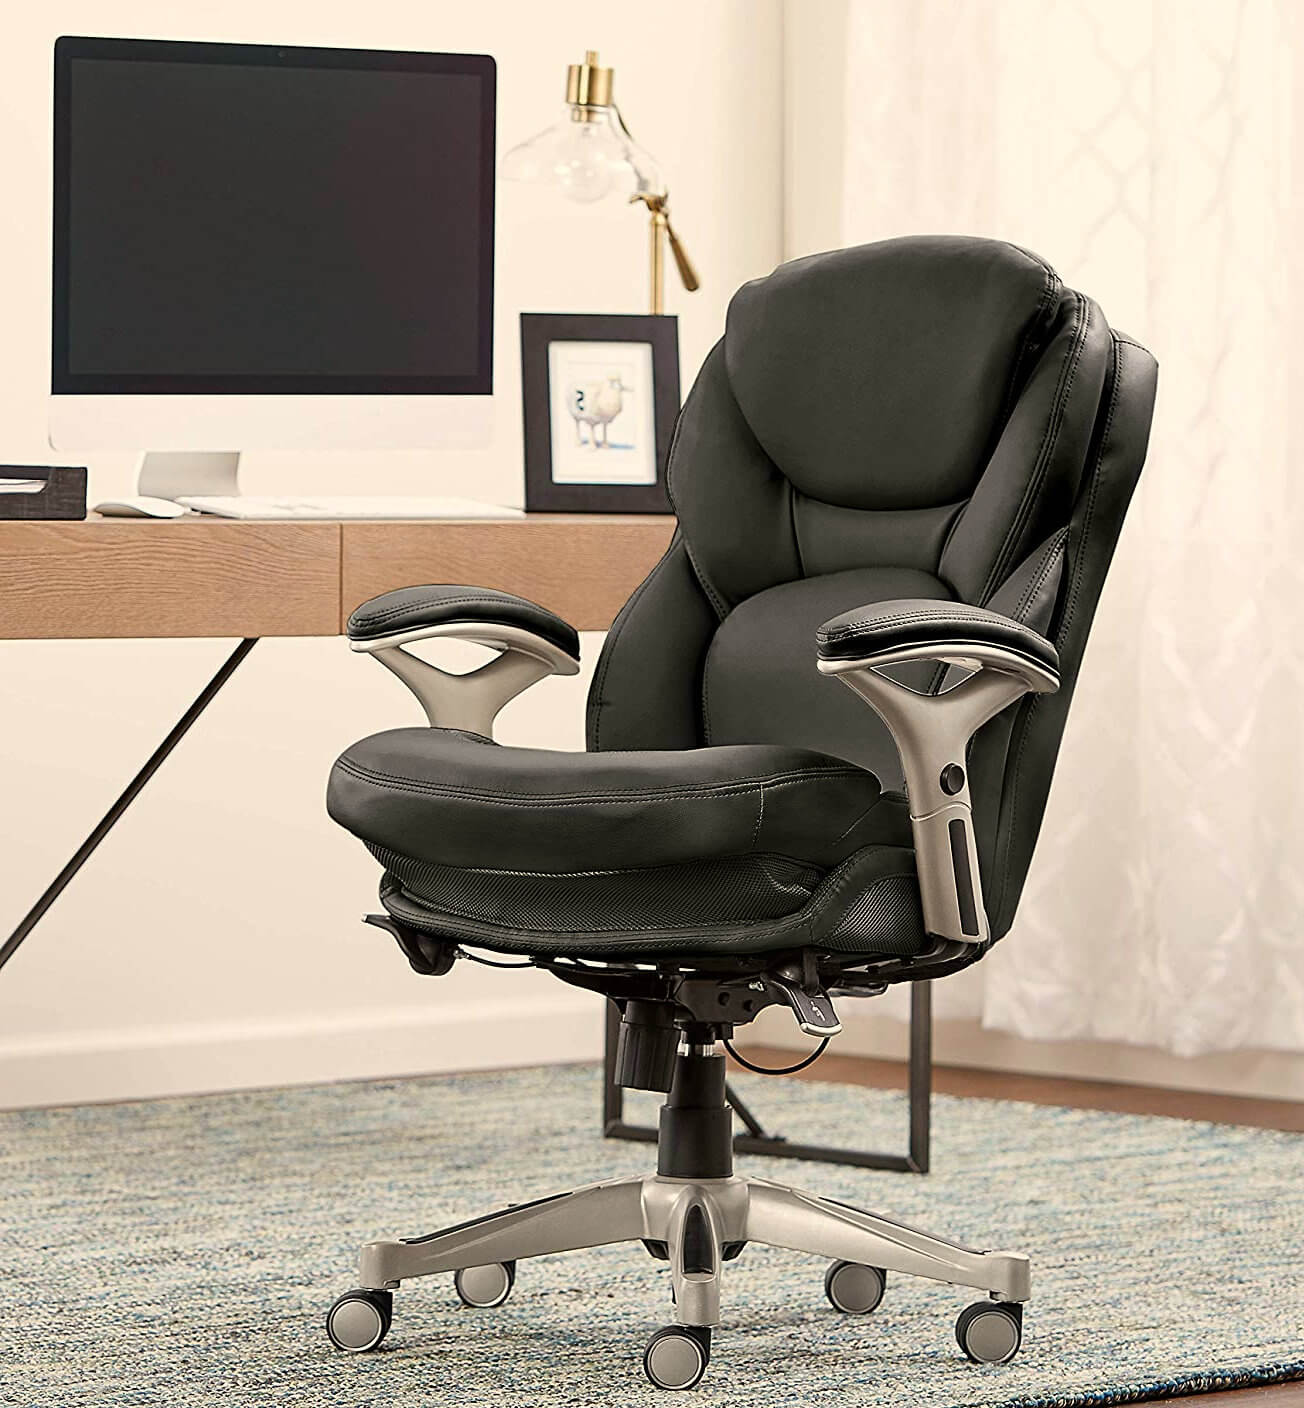 Ergonomic Desk Chair Amazon ~ jbydesignllc